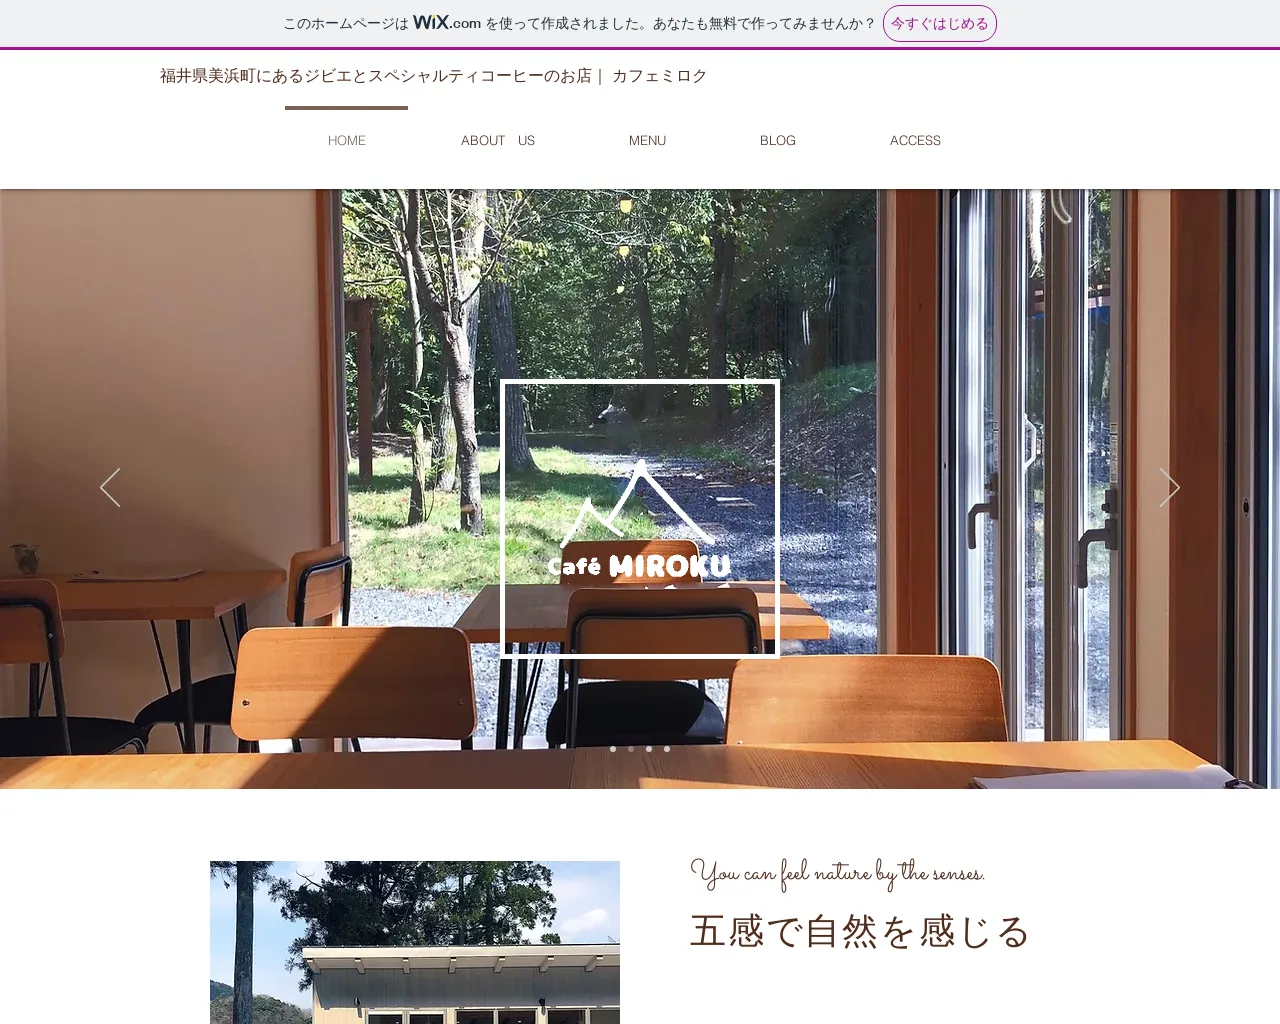 Café MIROKU site